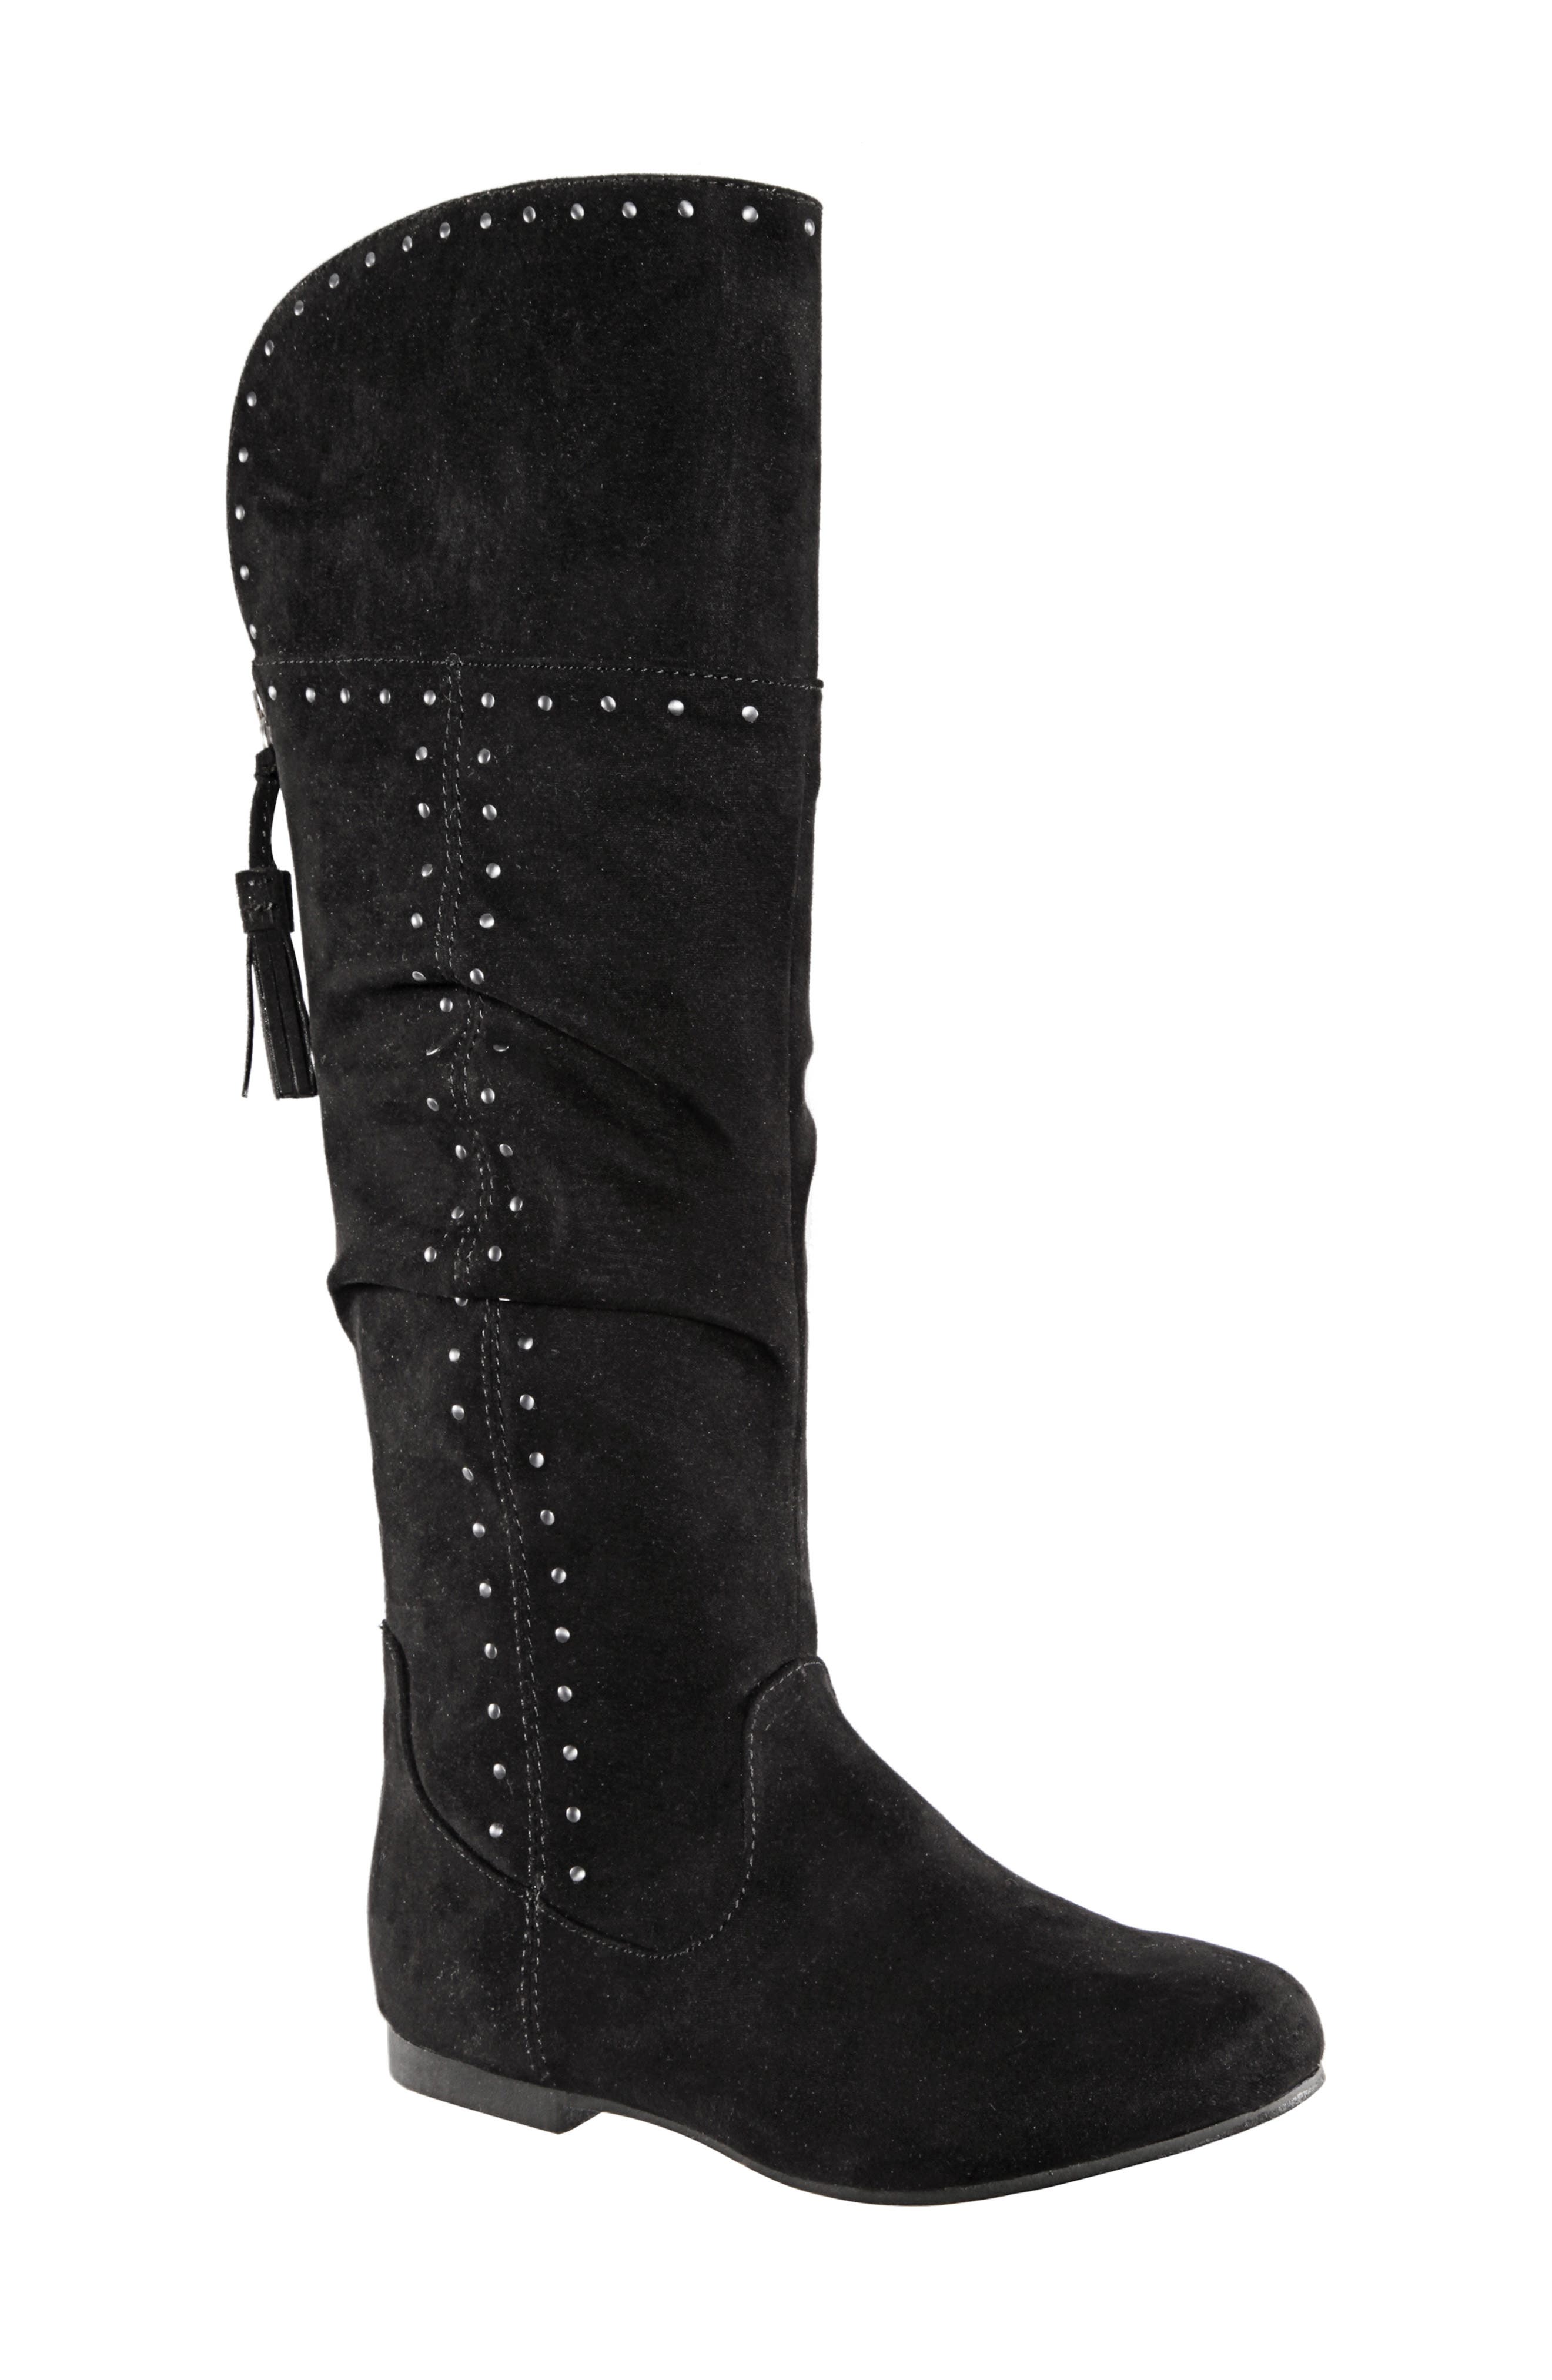 UPC 794378366812 product image for Girl's Nina Gem Slouchy Studded Boot, Size 2 M - Black | upcitemdb.com